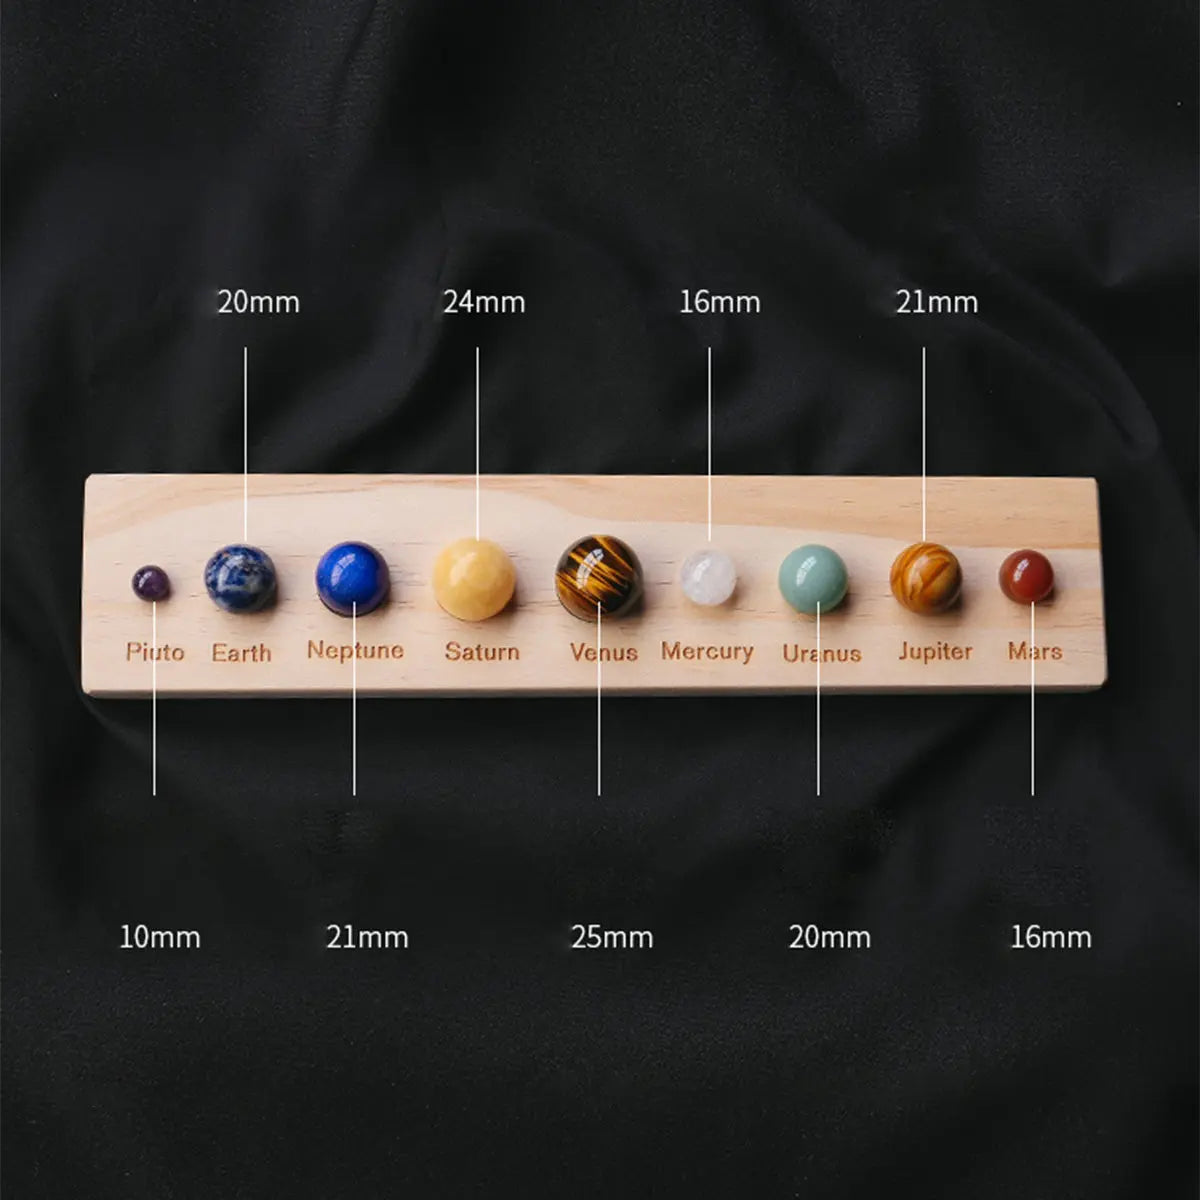 solar system ball size